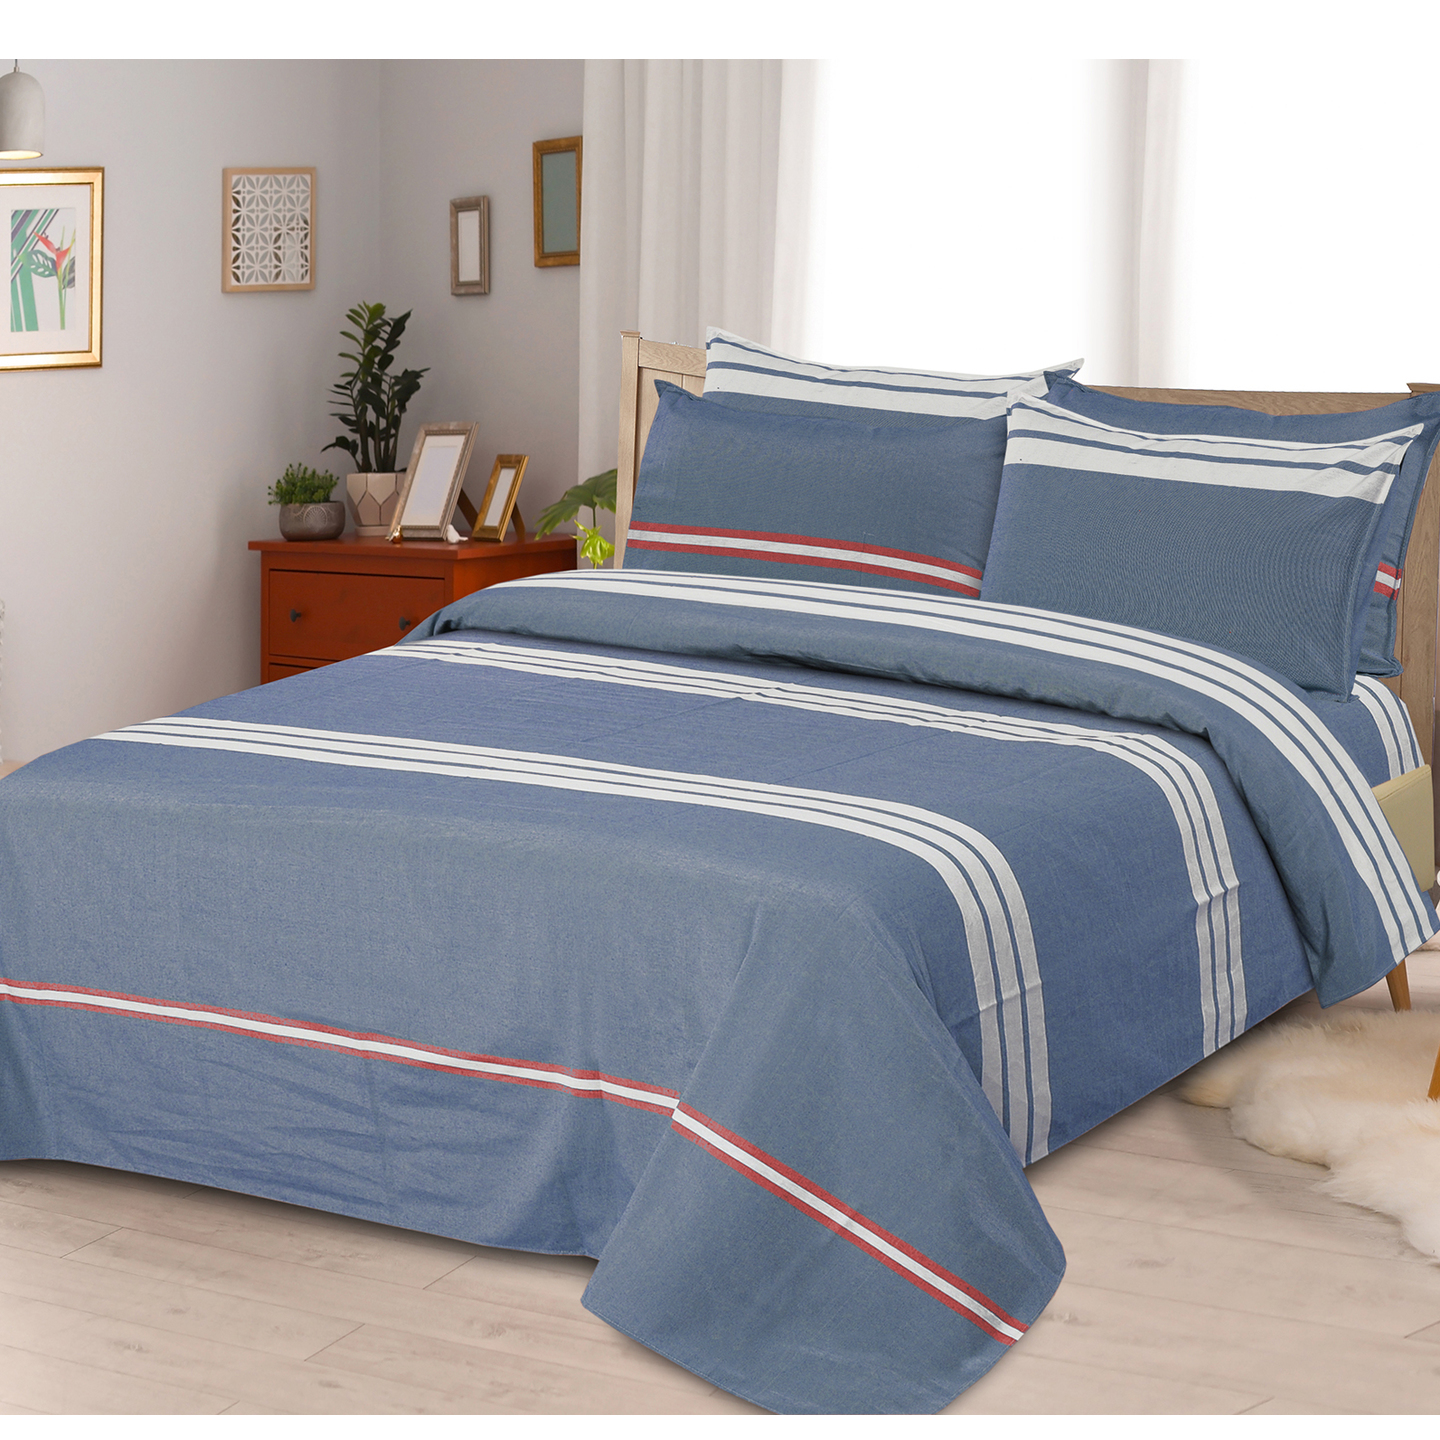 Handtex home cotton double bedsheet 90x100 inch N.Blue